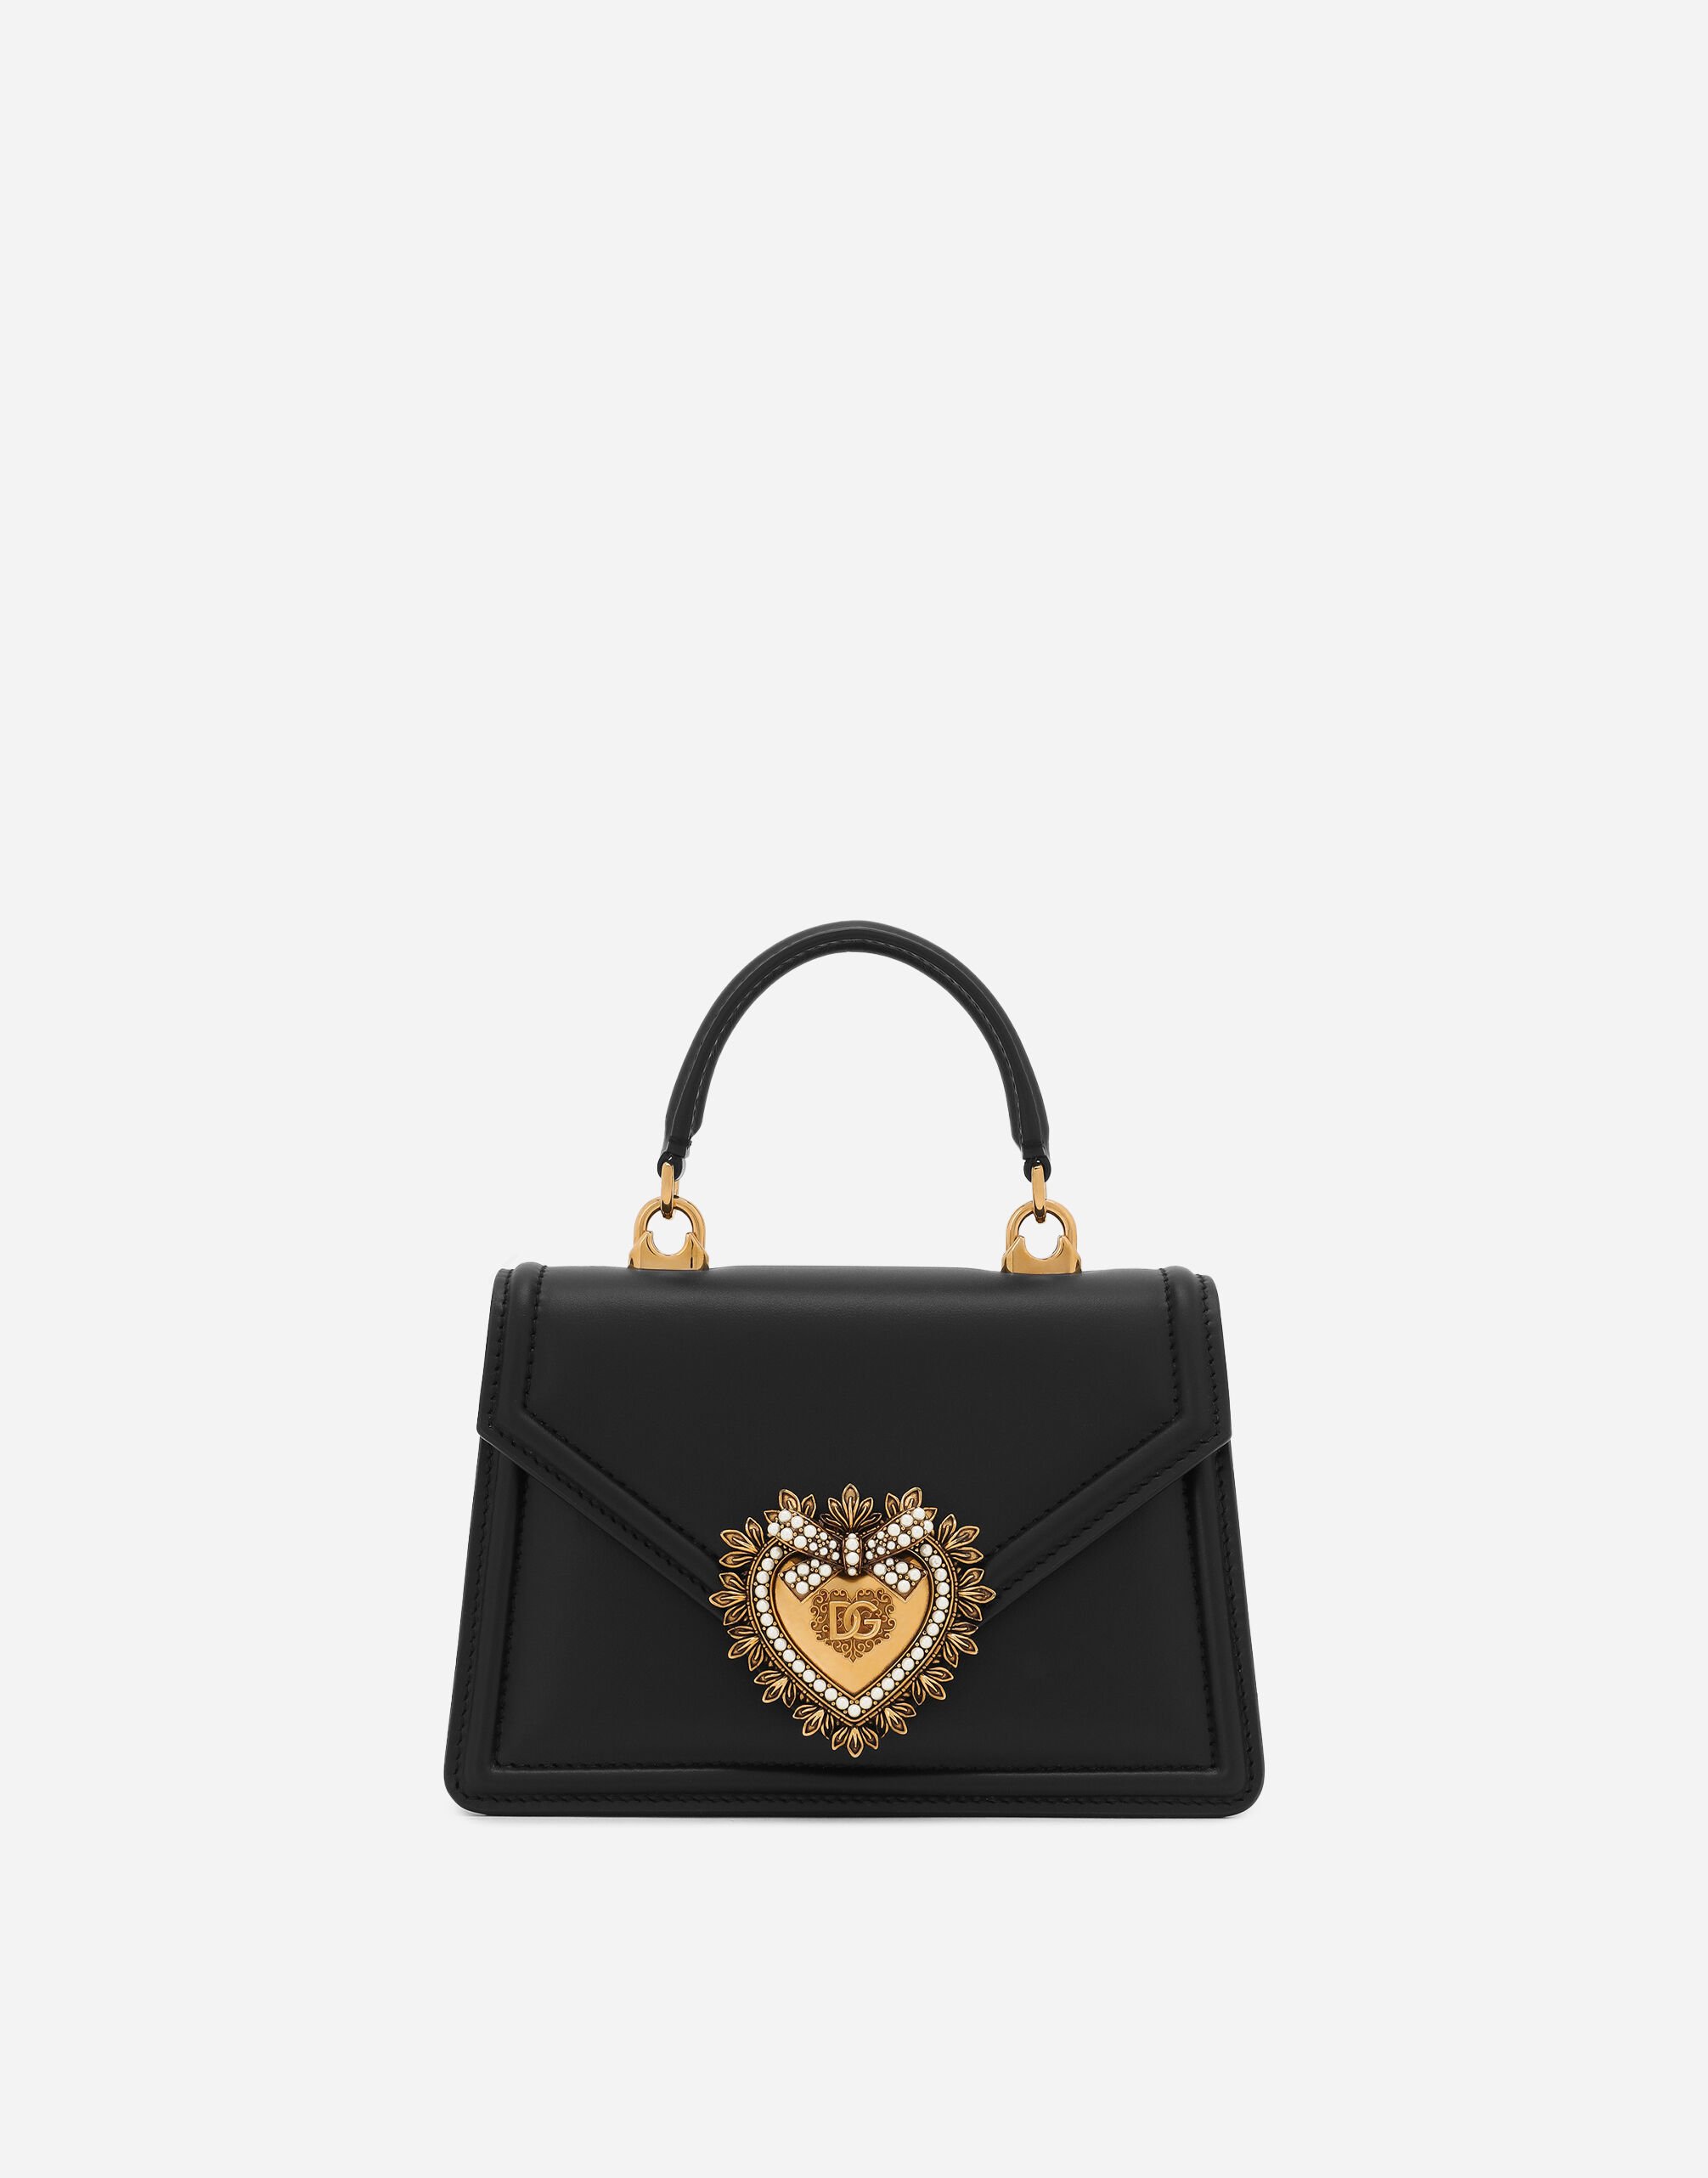 Dolce & Gabbana Small smooth calfskin Devotion bag Black VG443FVP187